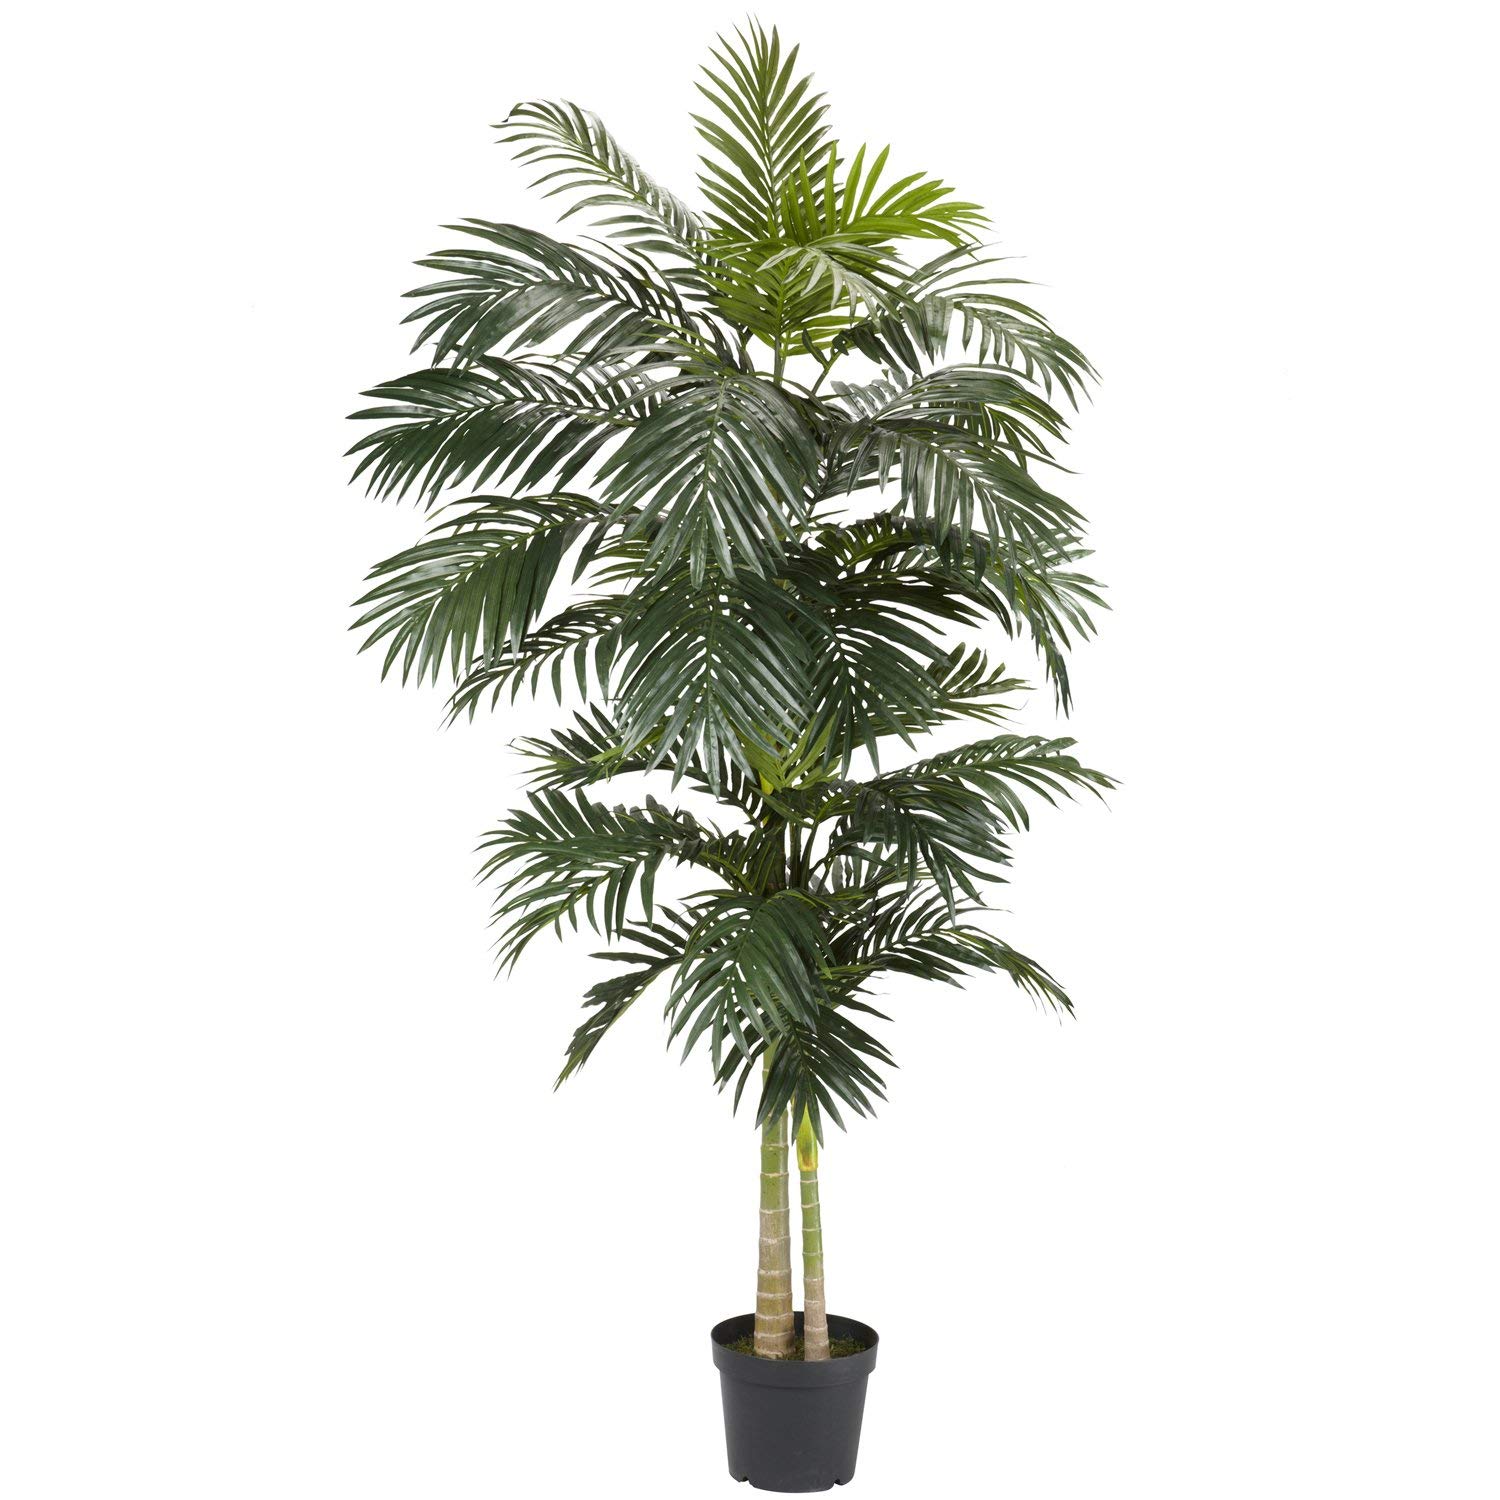 Amazon.com: Nearly Natural 5326 Golden Cane Palm Silk Tree, 8-Feet ...